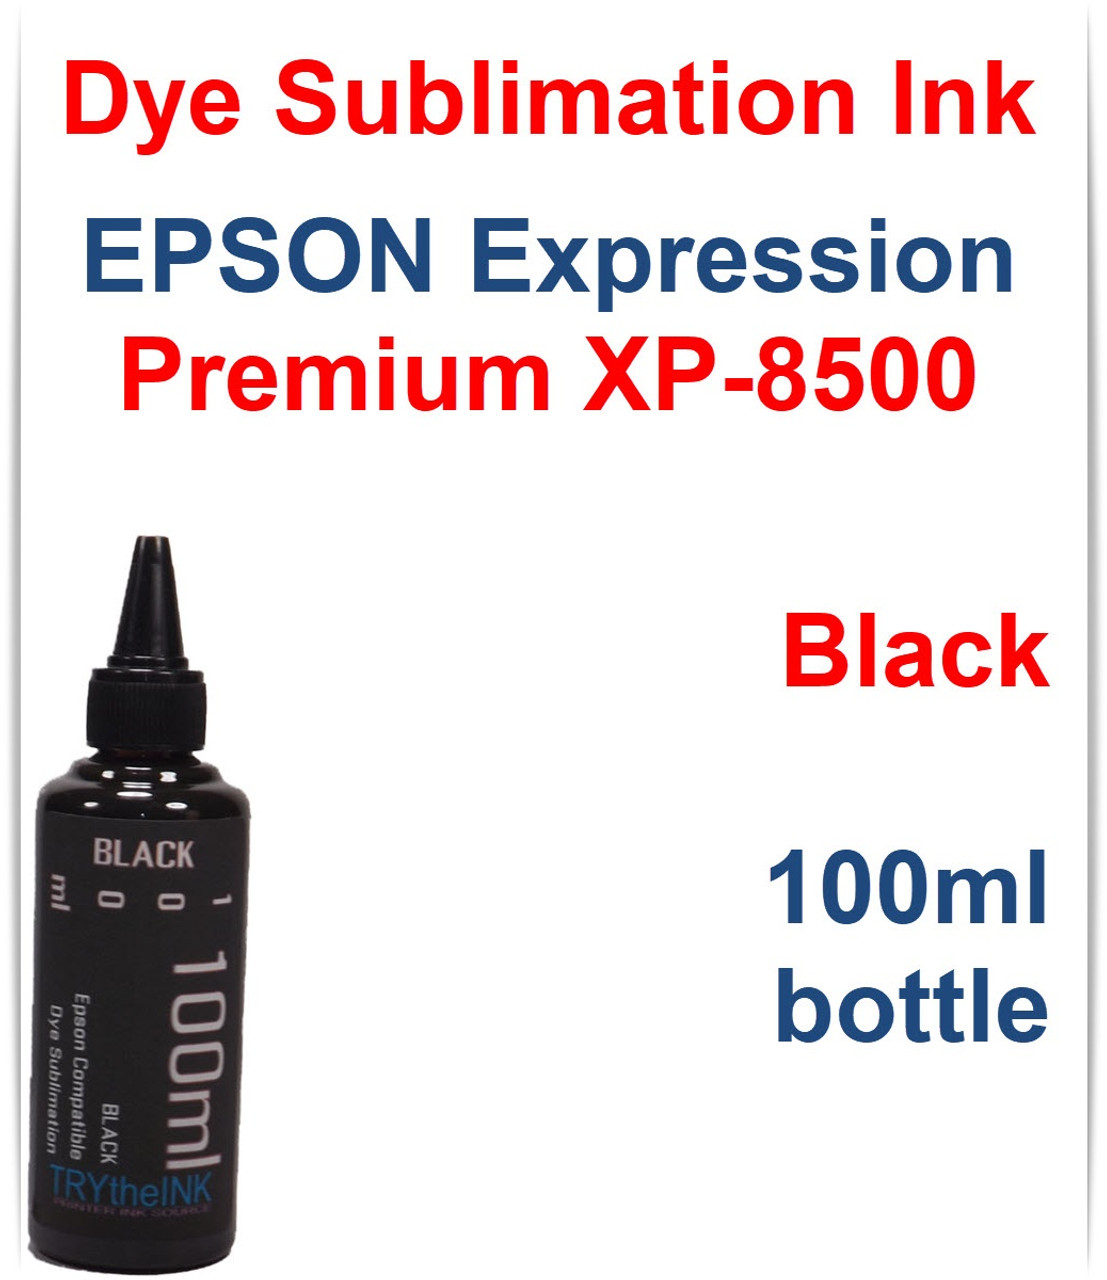 Black 100ml Bottle Dye Sublimation Ink for Epson Expression Premium XP-8500 Printer